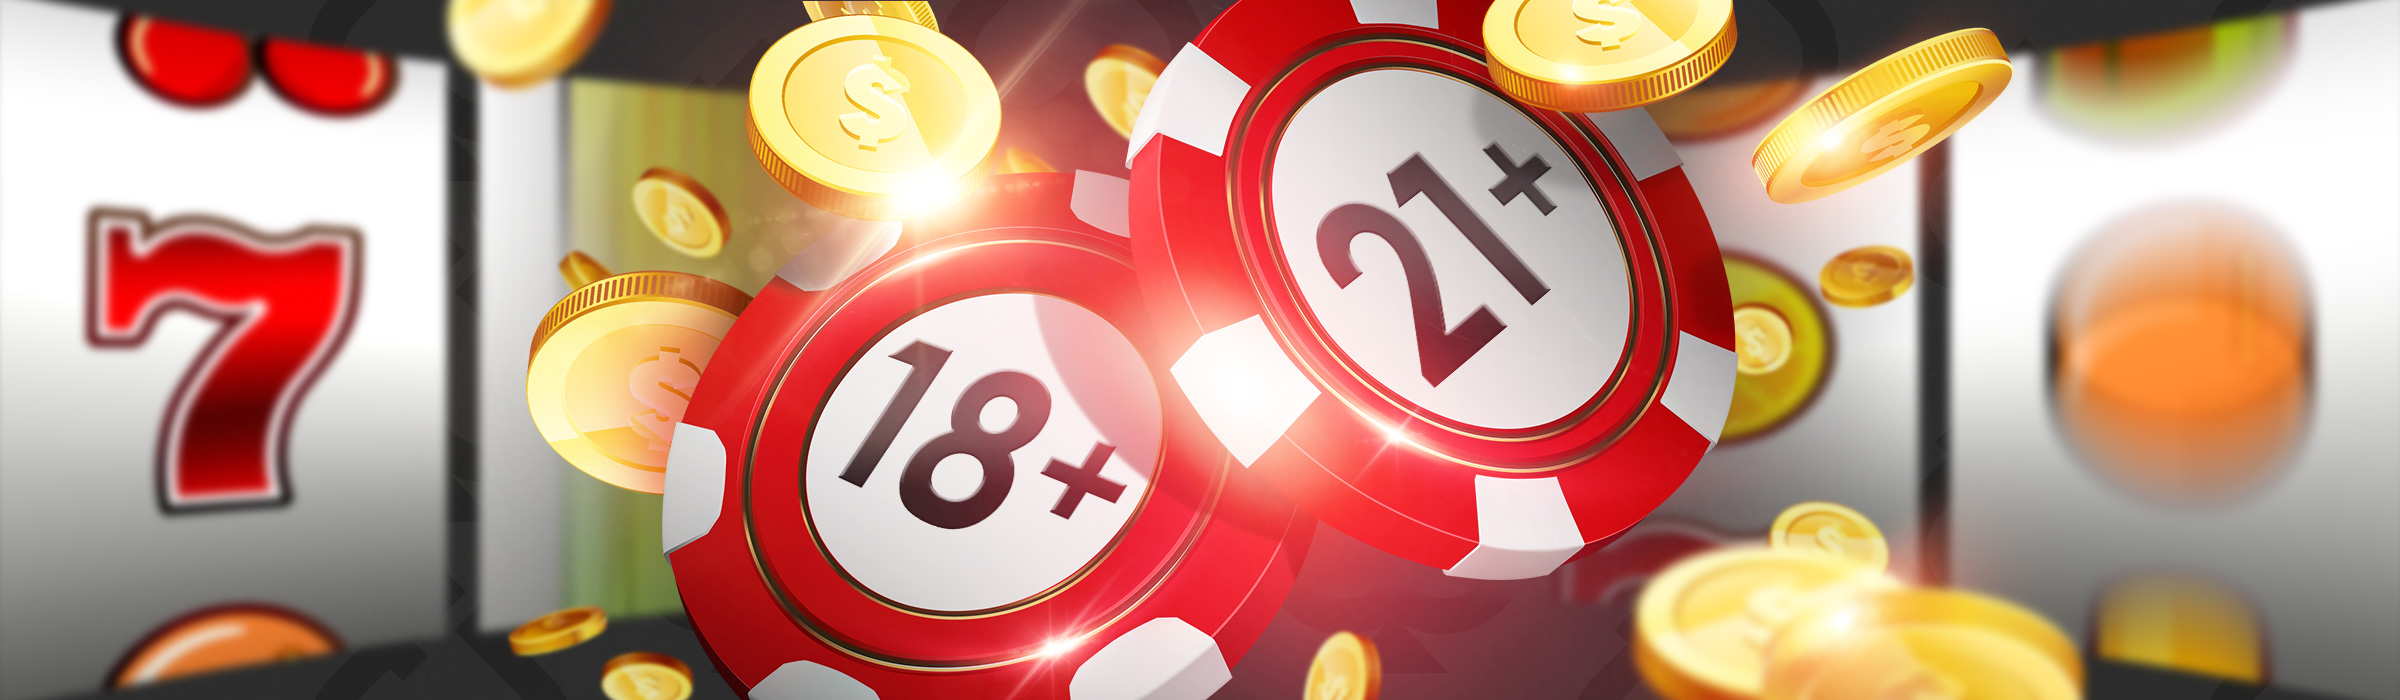 Online Casinos Test: Fair Gaming Age